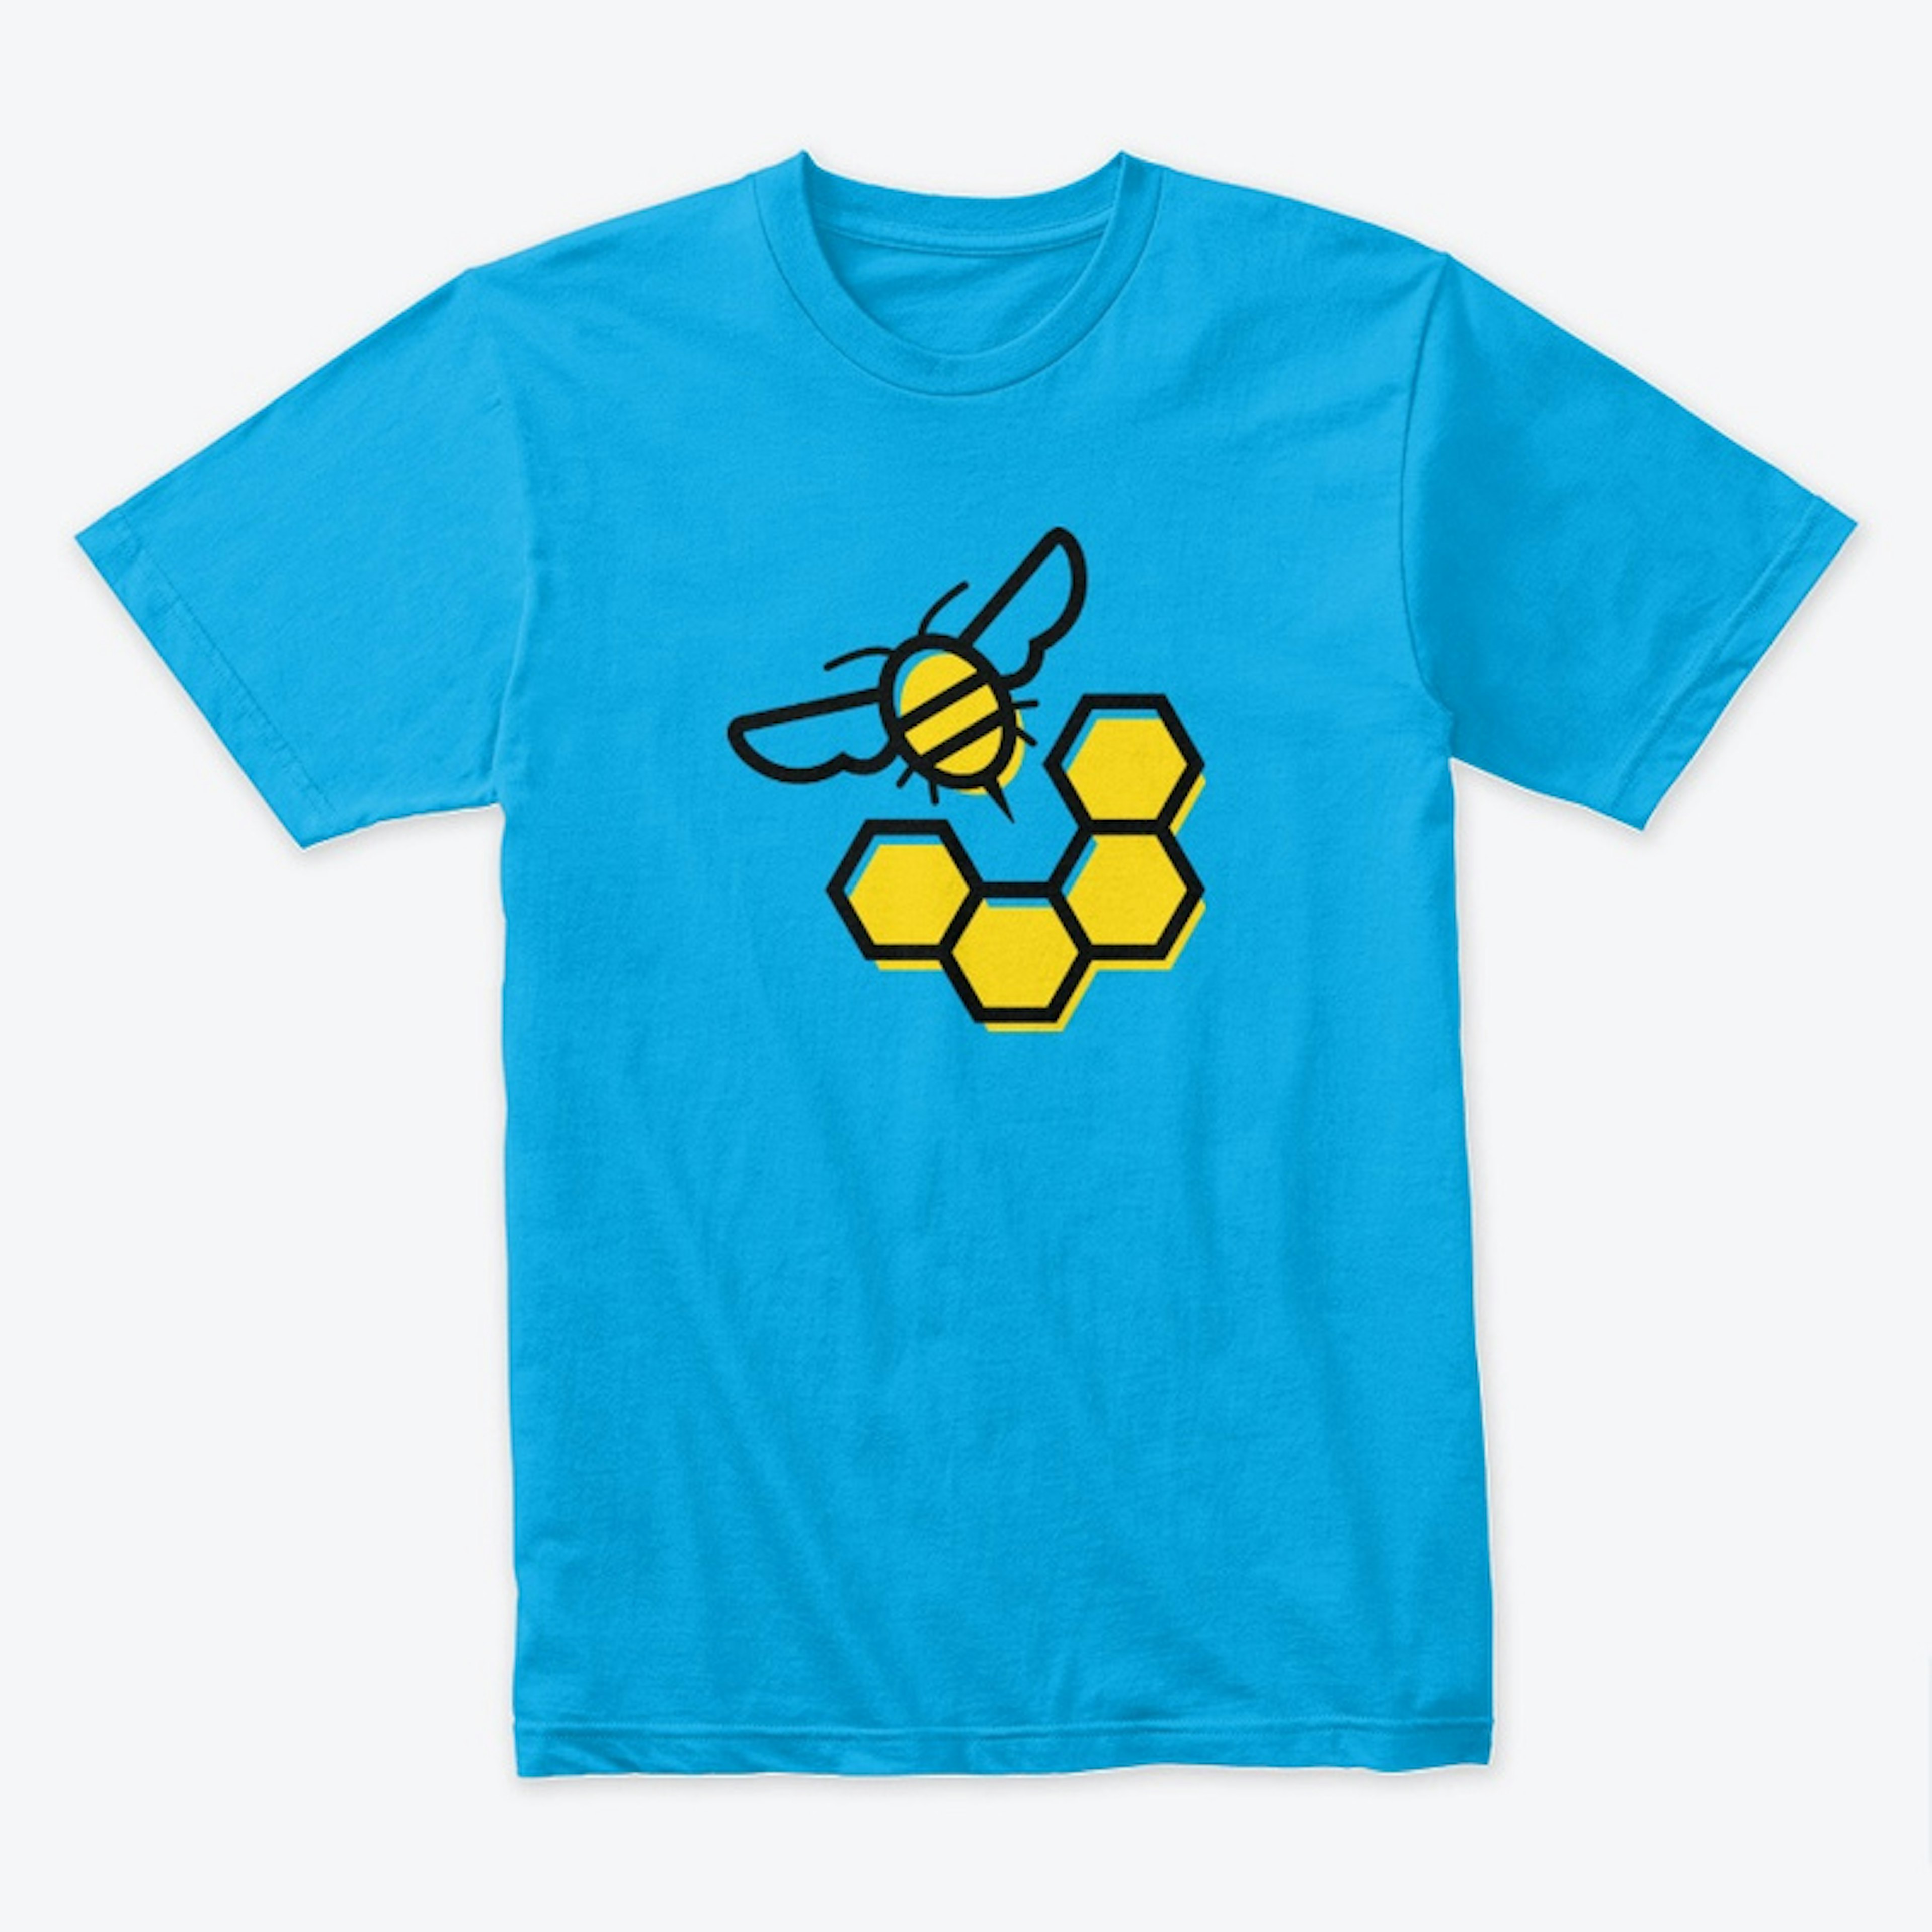 Save the Geometric Bees